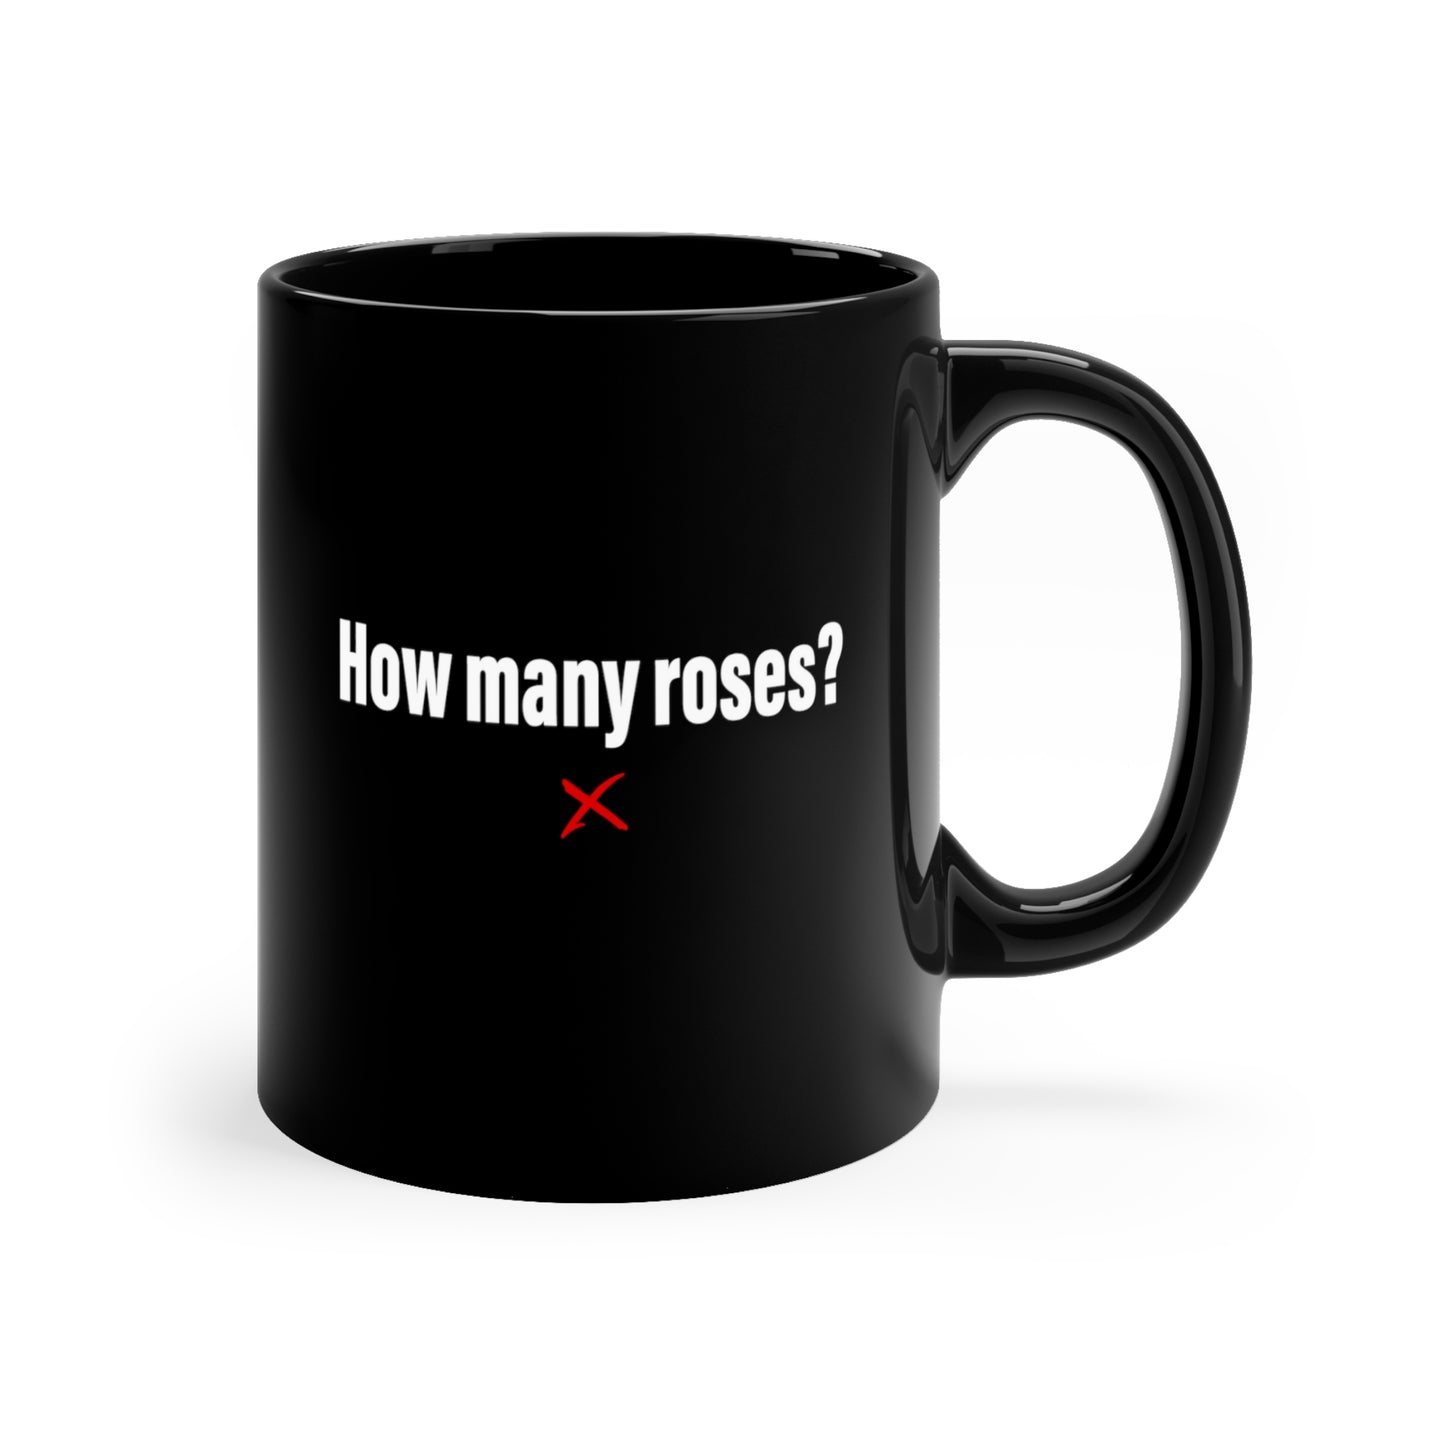 How many roses? - Mug